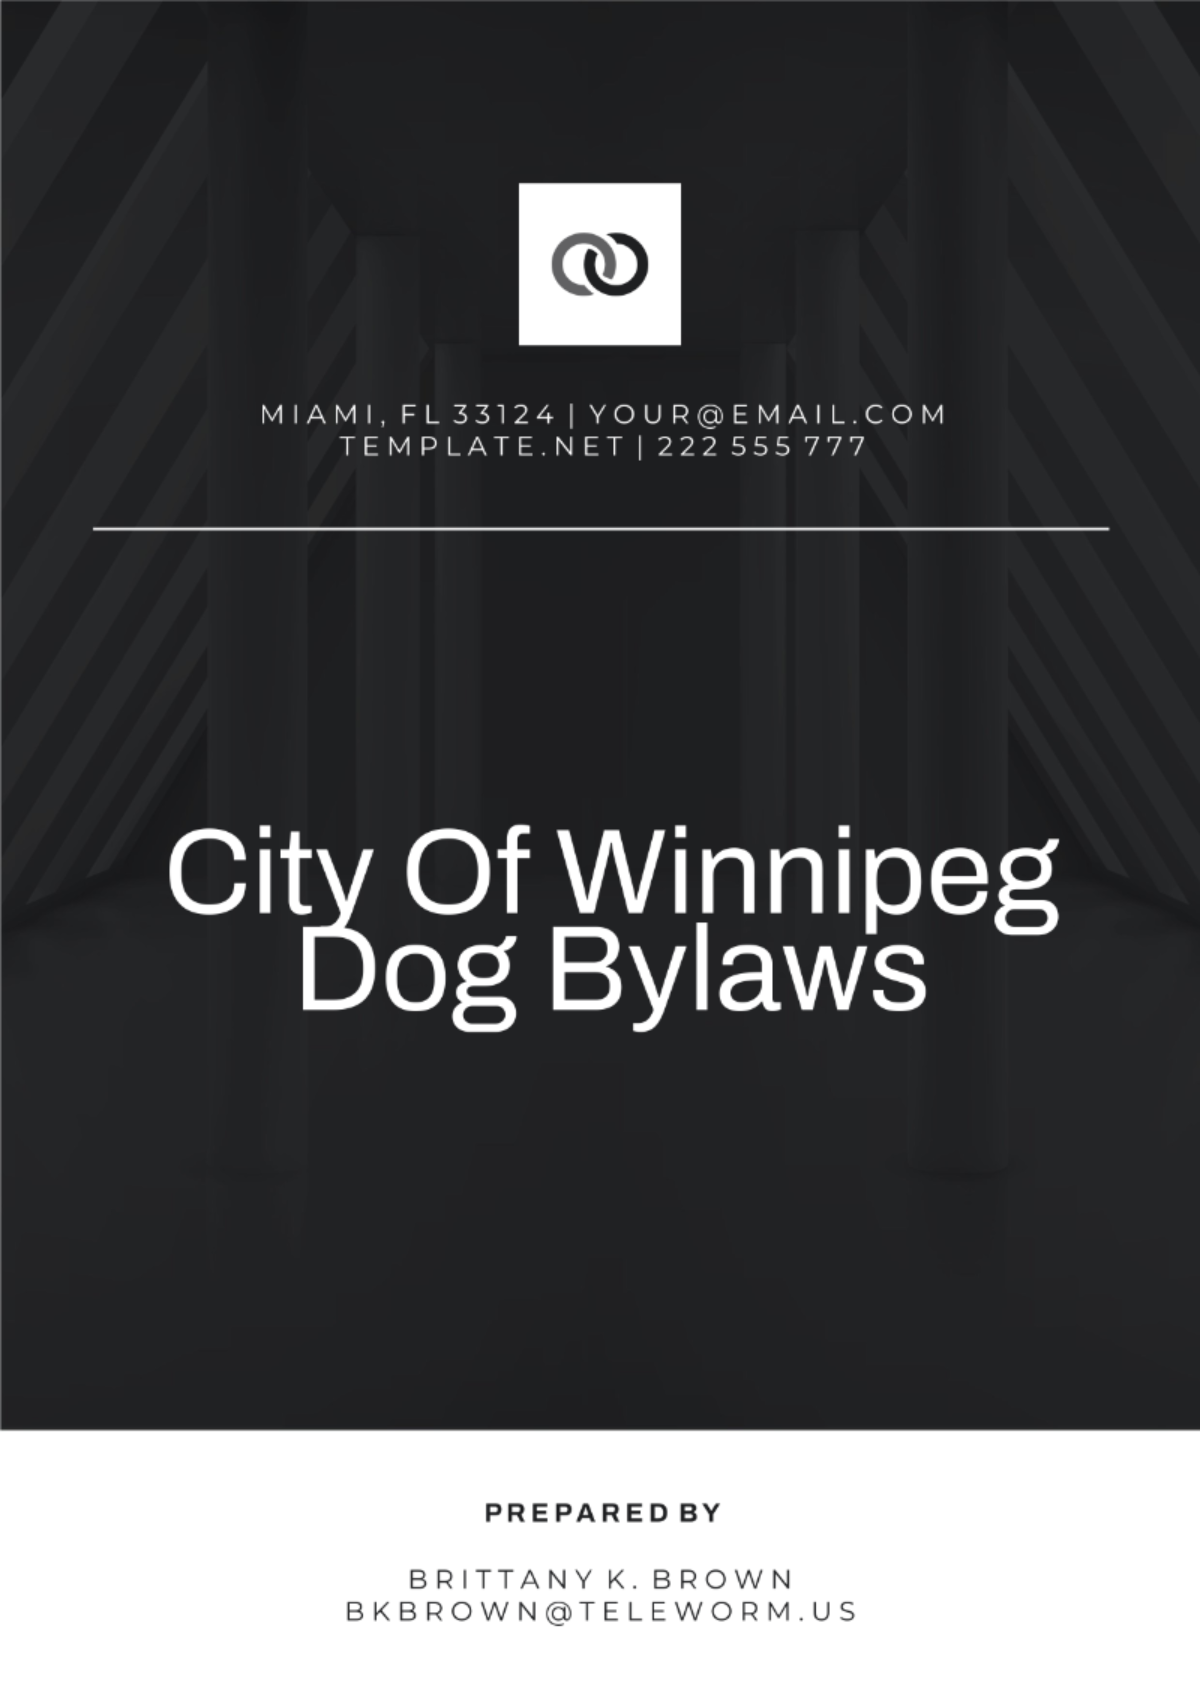 City Of Winnipeg Dog Bylaws Template